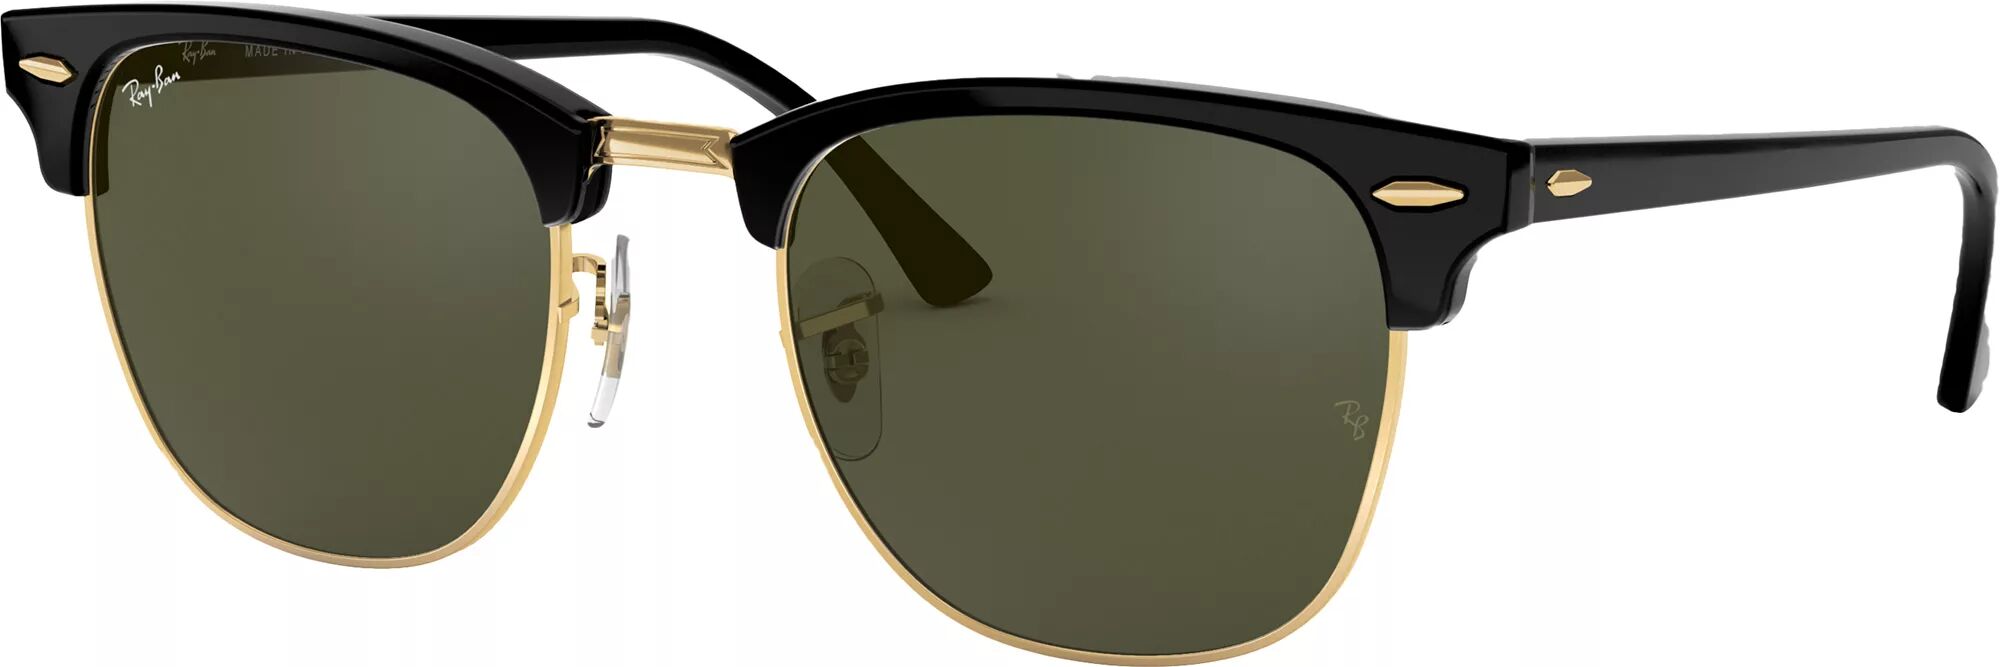 Ray-Ban Clubmaster Classic Sunglasses, Men's, Green